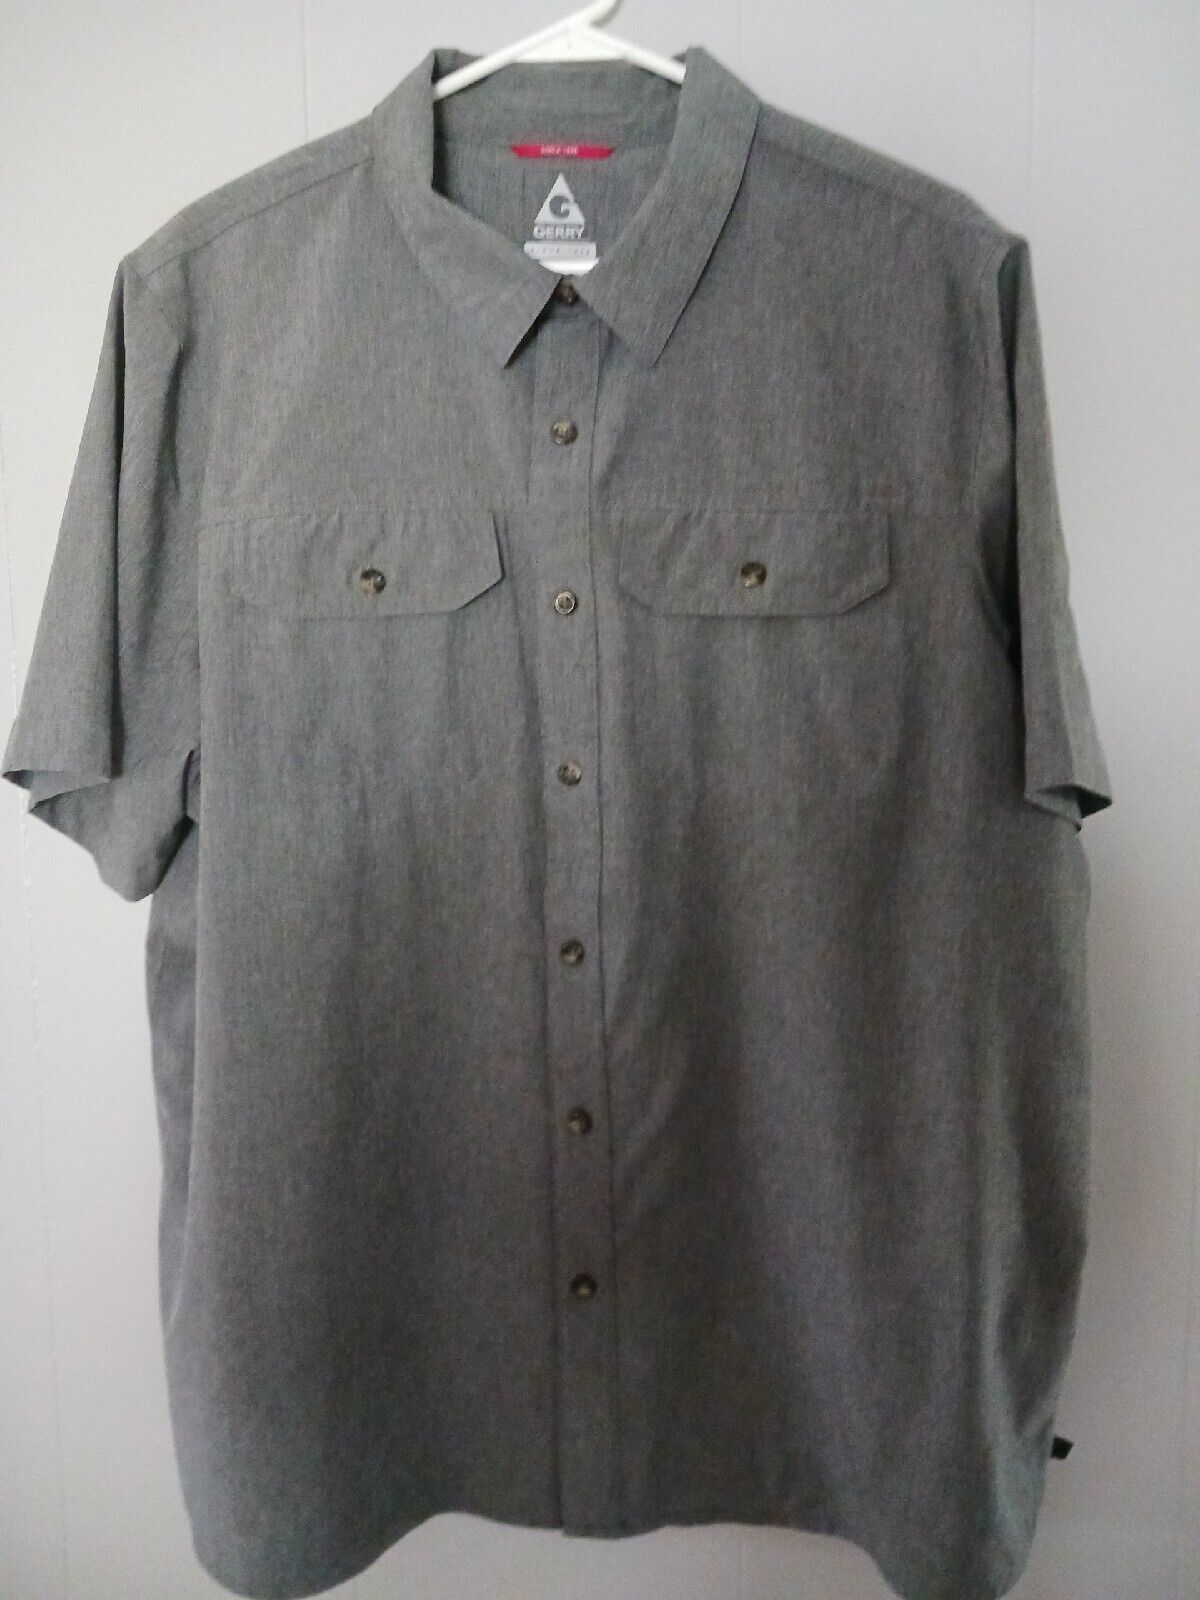 Gerry Men's Short Sleeve Quick Dry Tech Grey Woven Shirt Large